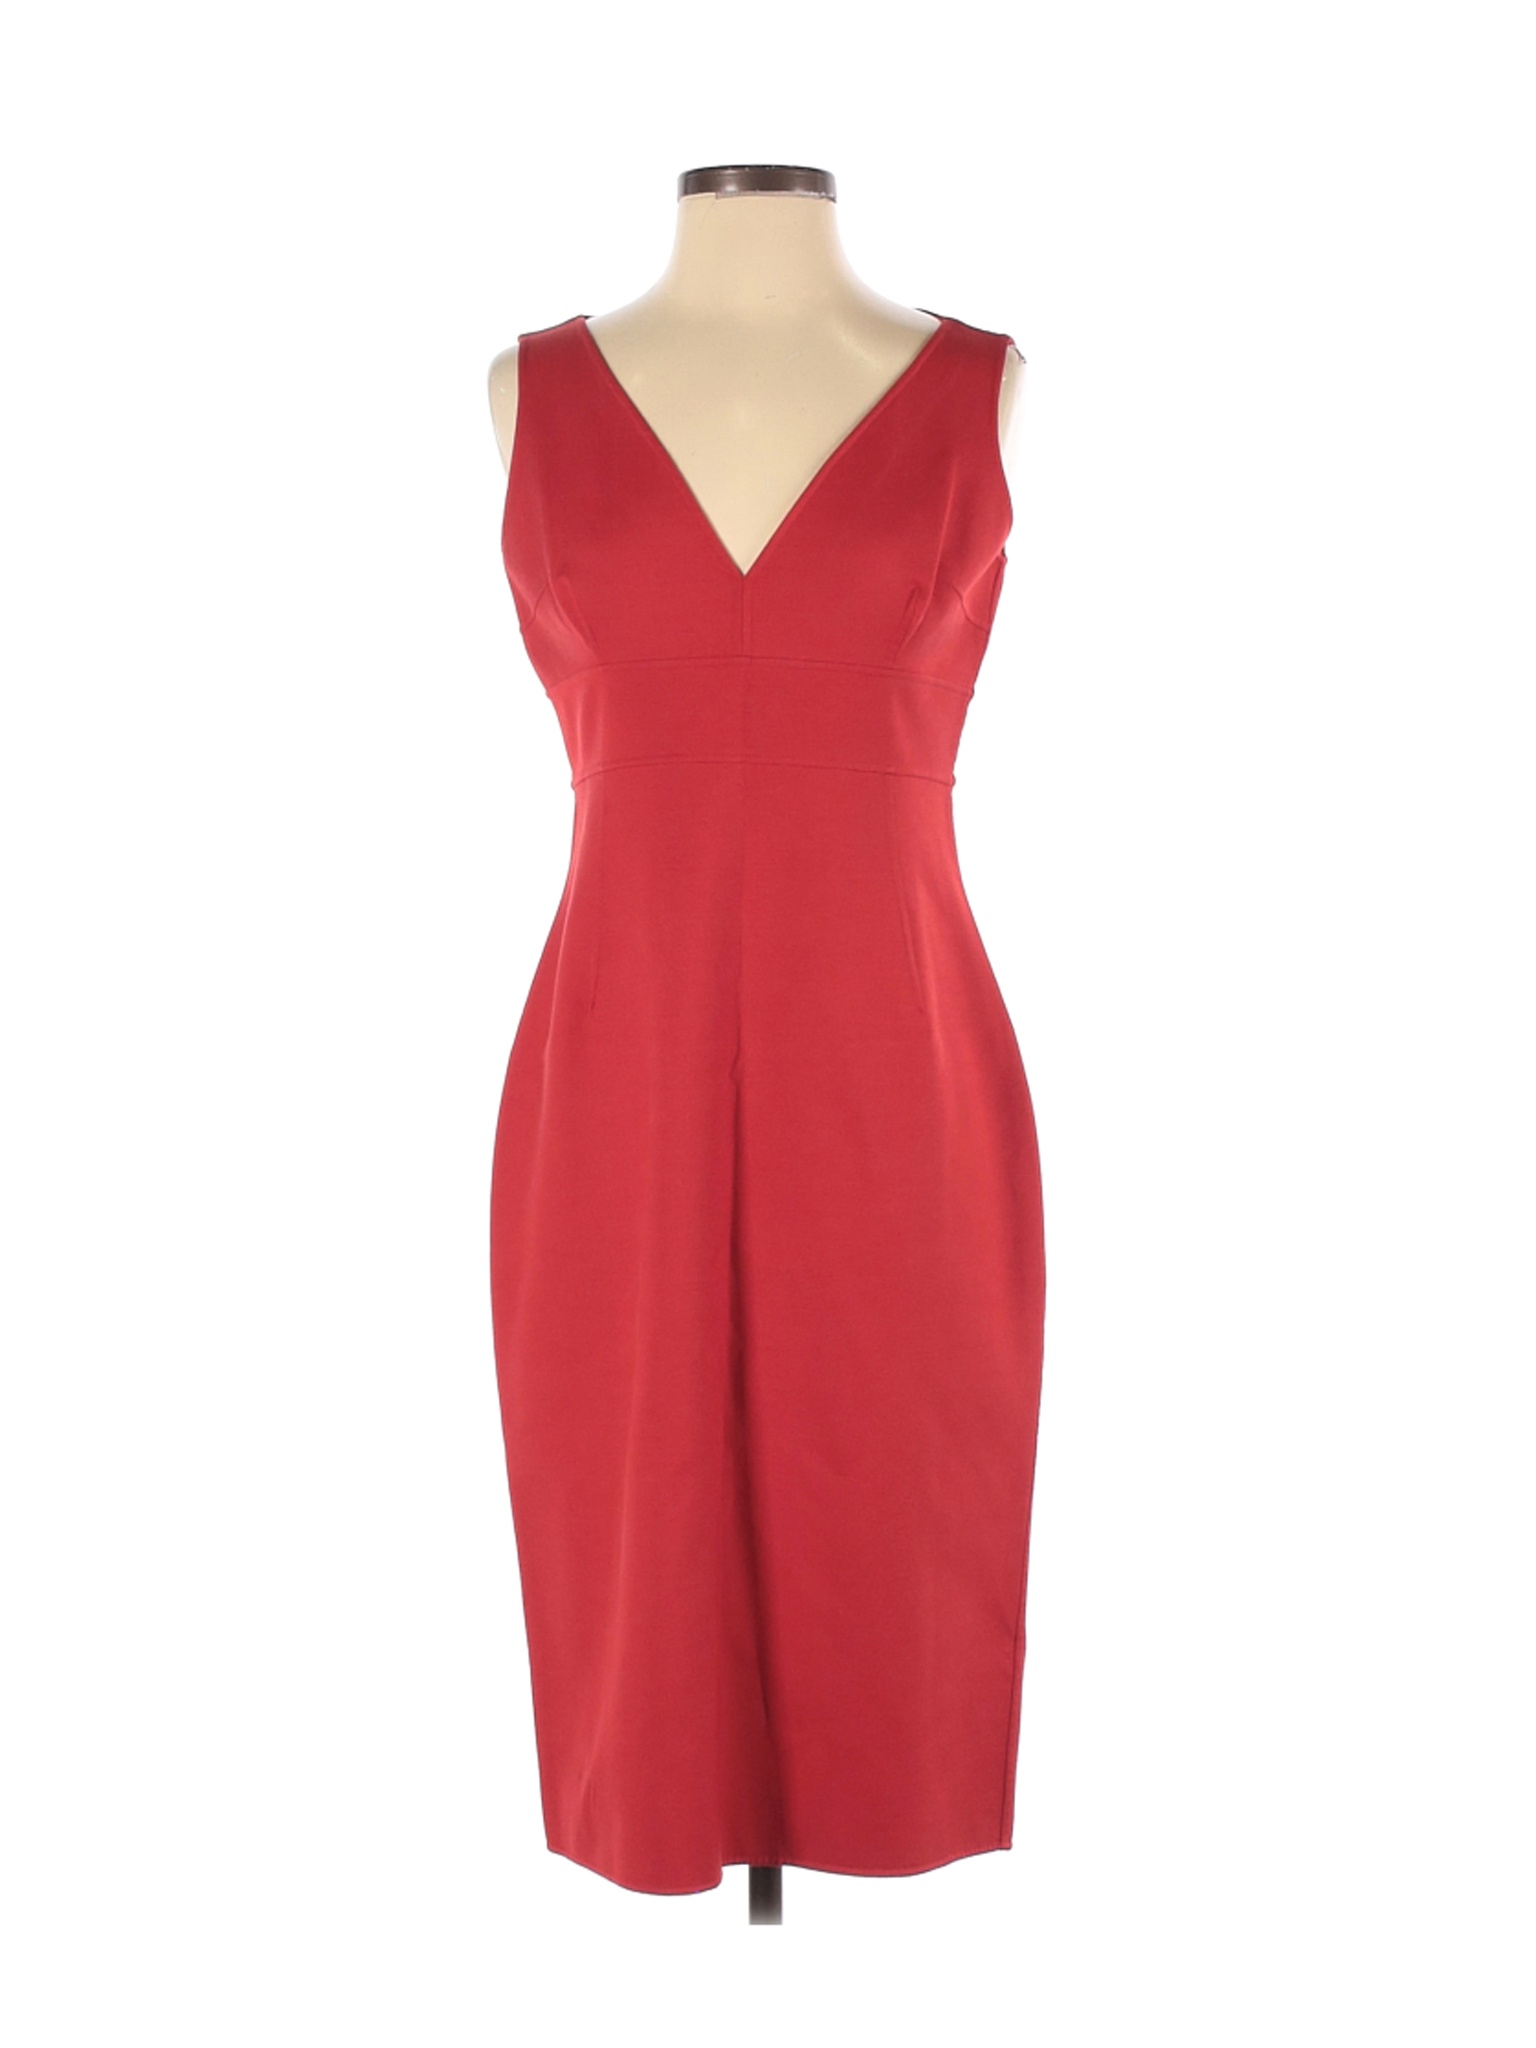 MICHAEL Michael Kors Women Red Casual Dress S | eBay